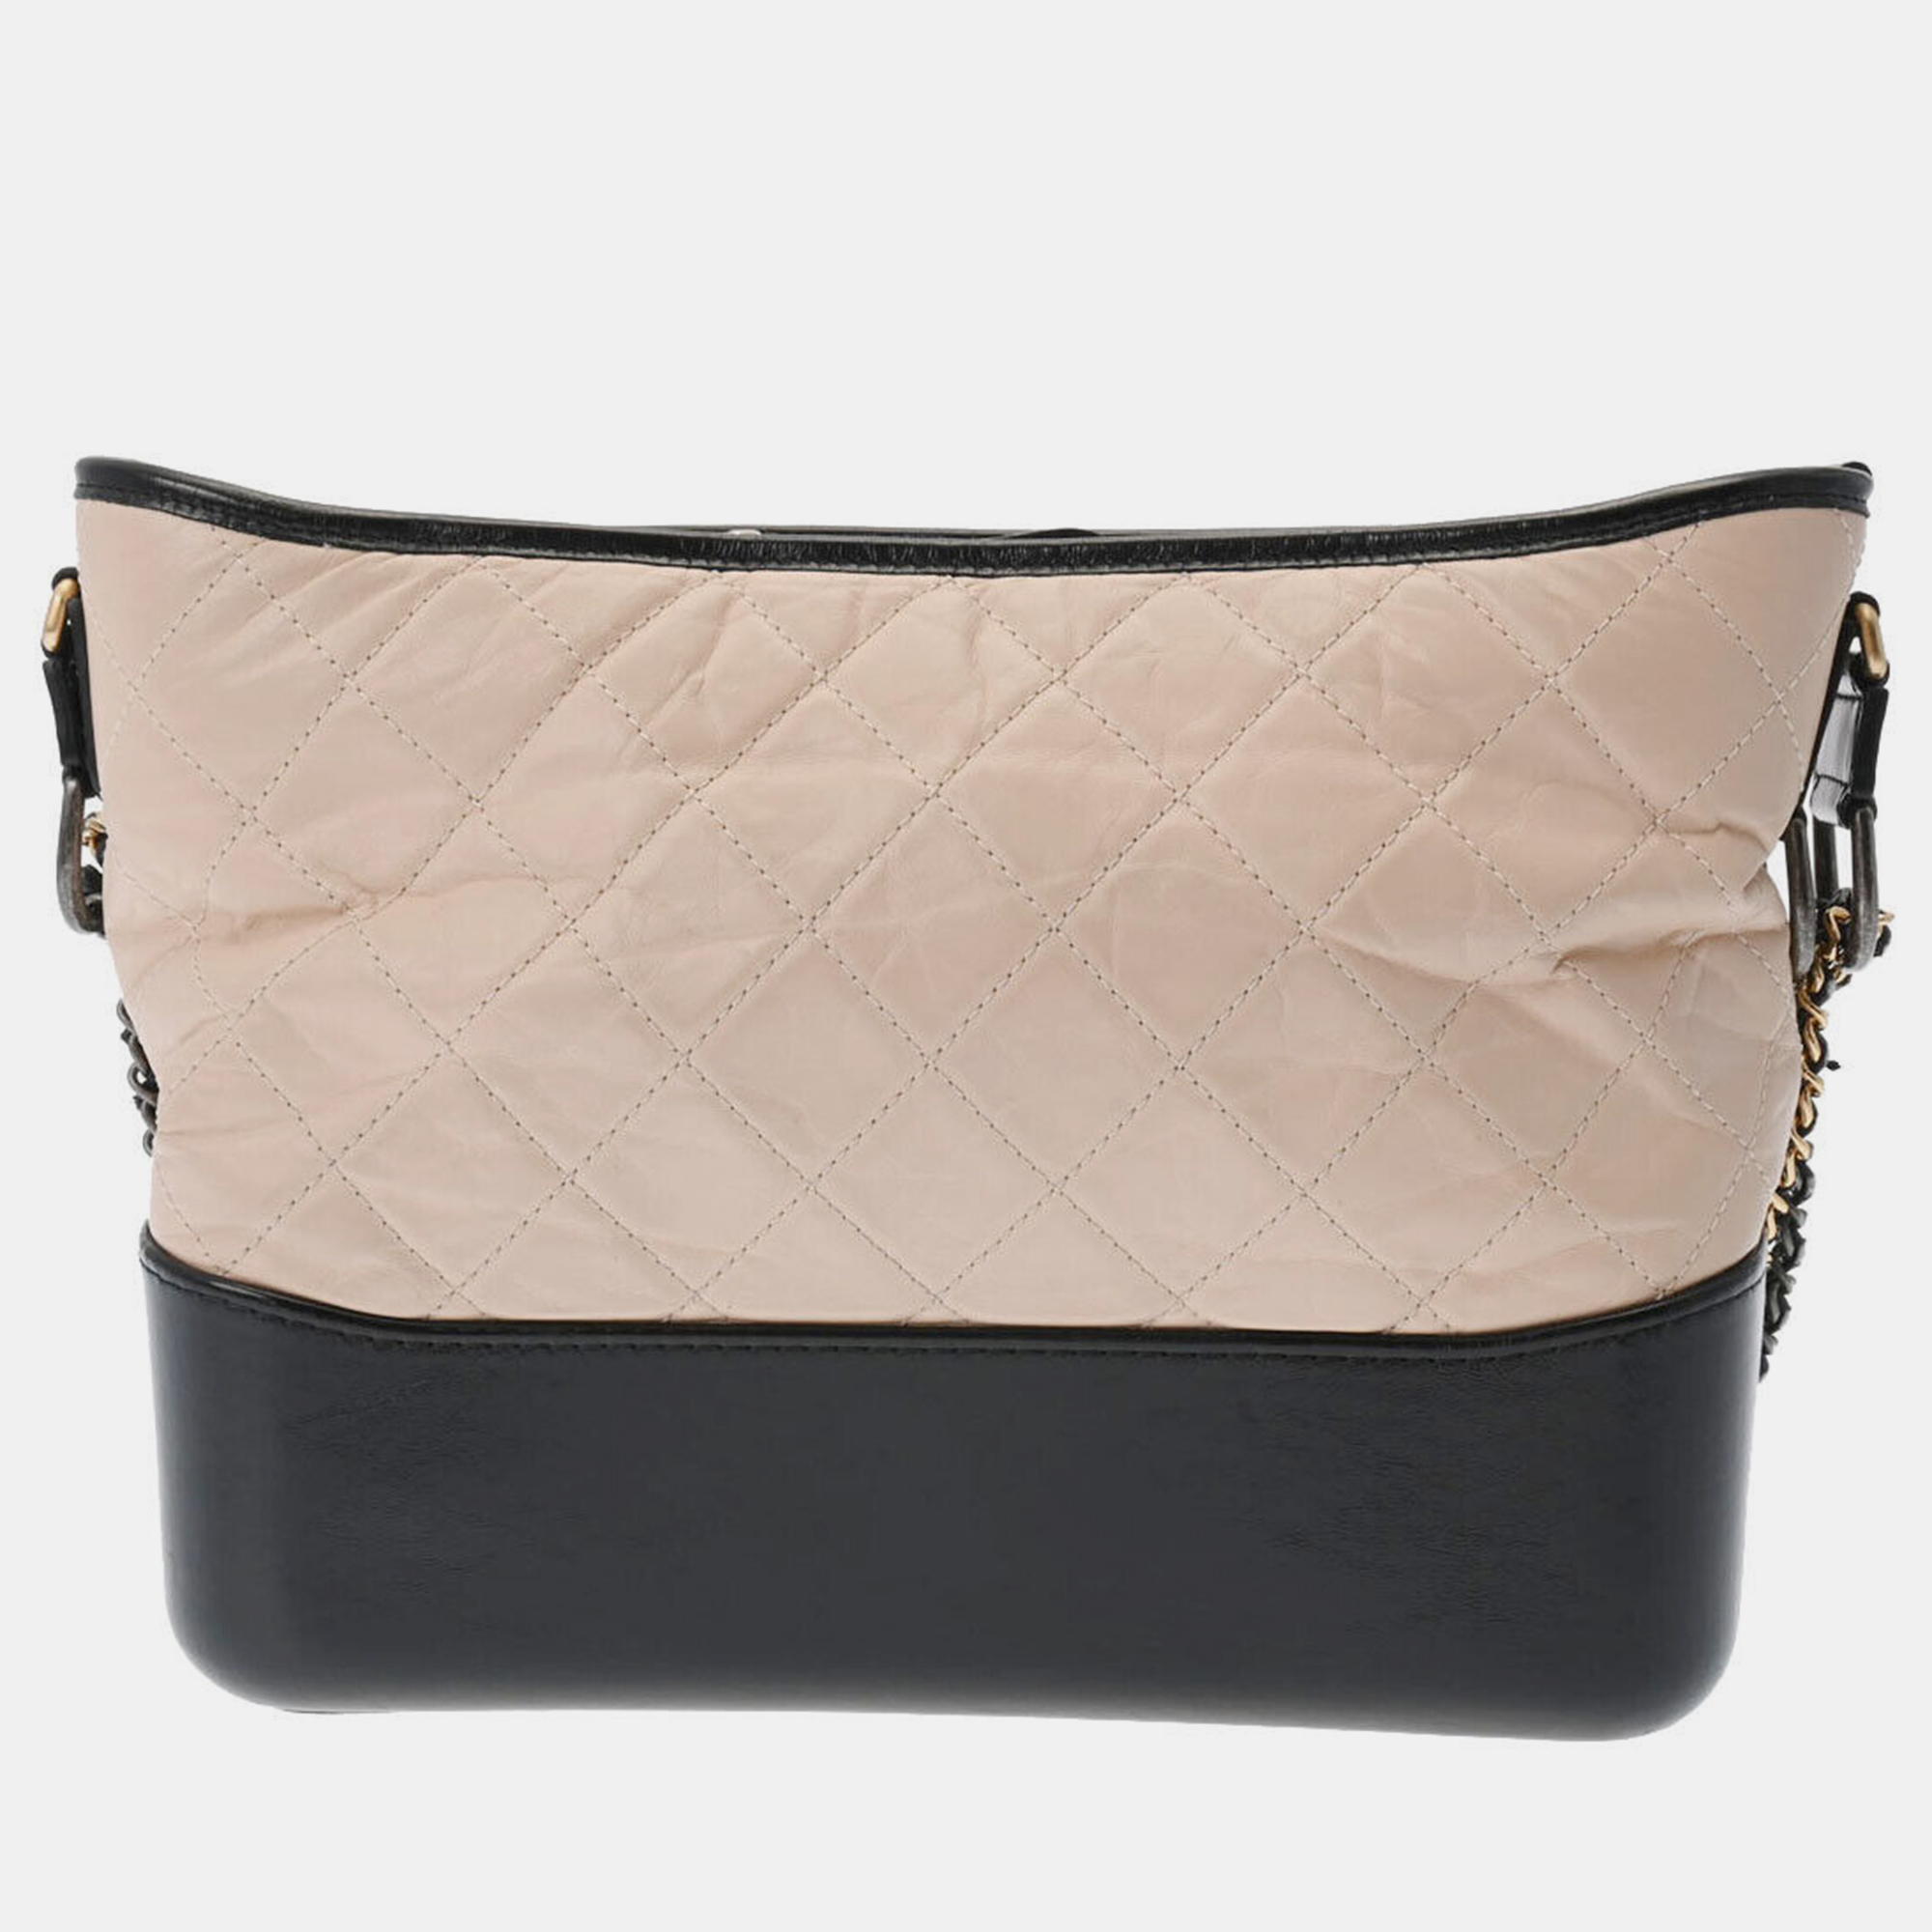 Chanel beige leather medium gabrielle shoulder bags